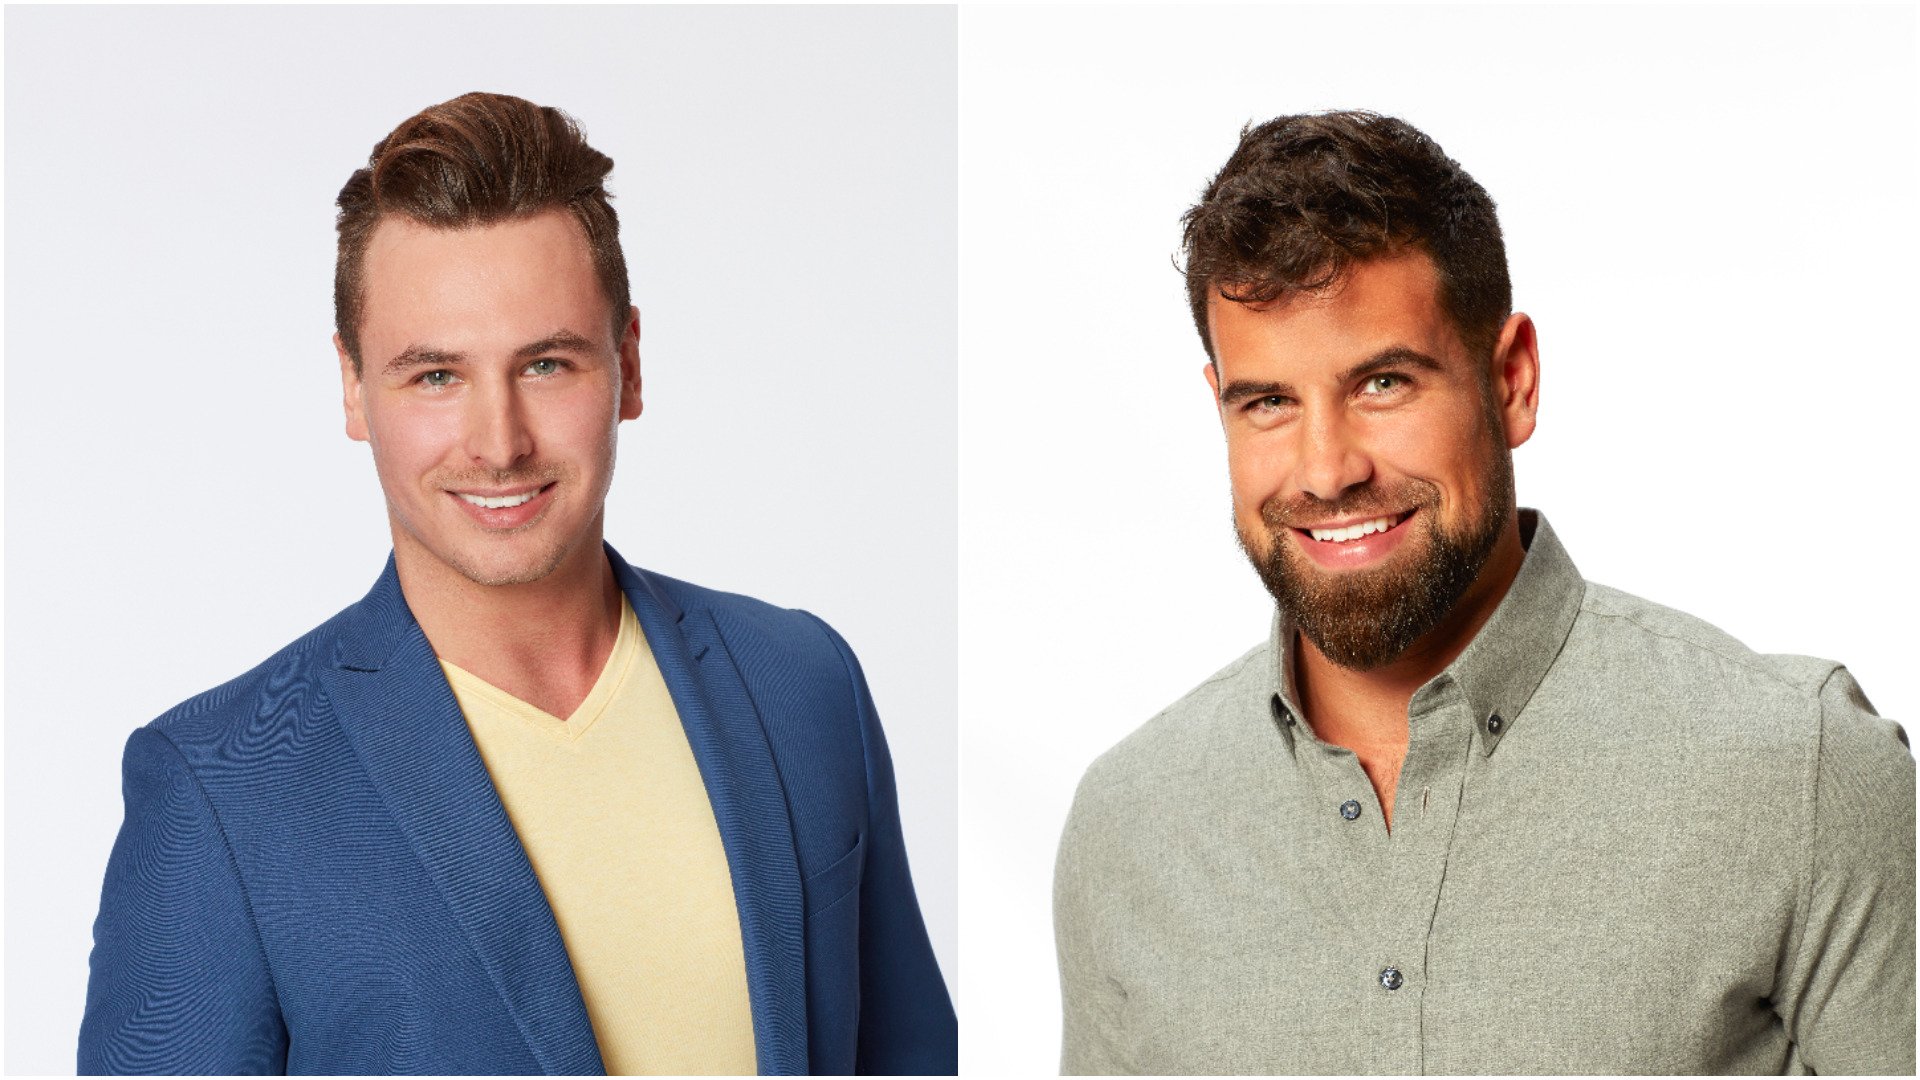 Headshots of Brendan Scanzano and Blake Moynes from ‘The Bachelorette’ Season 17